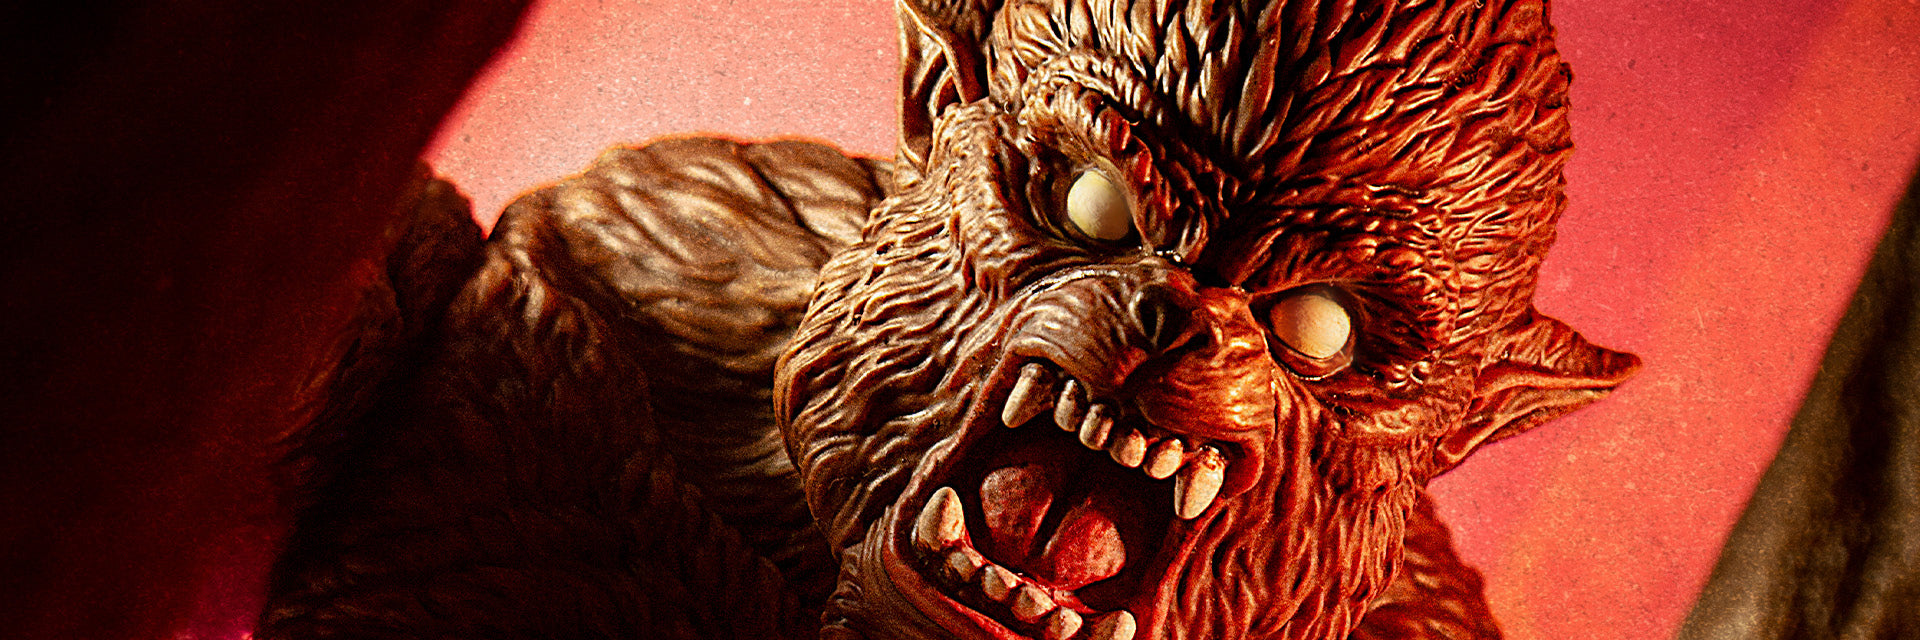 Werewolf By Night Marvel Studios Horror Movie Home Decor Poster